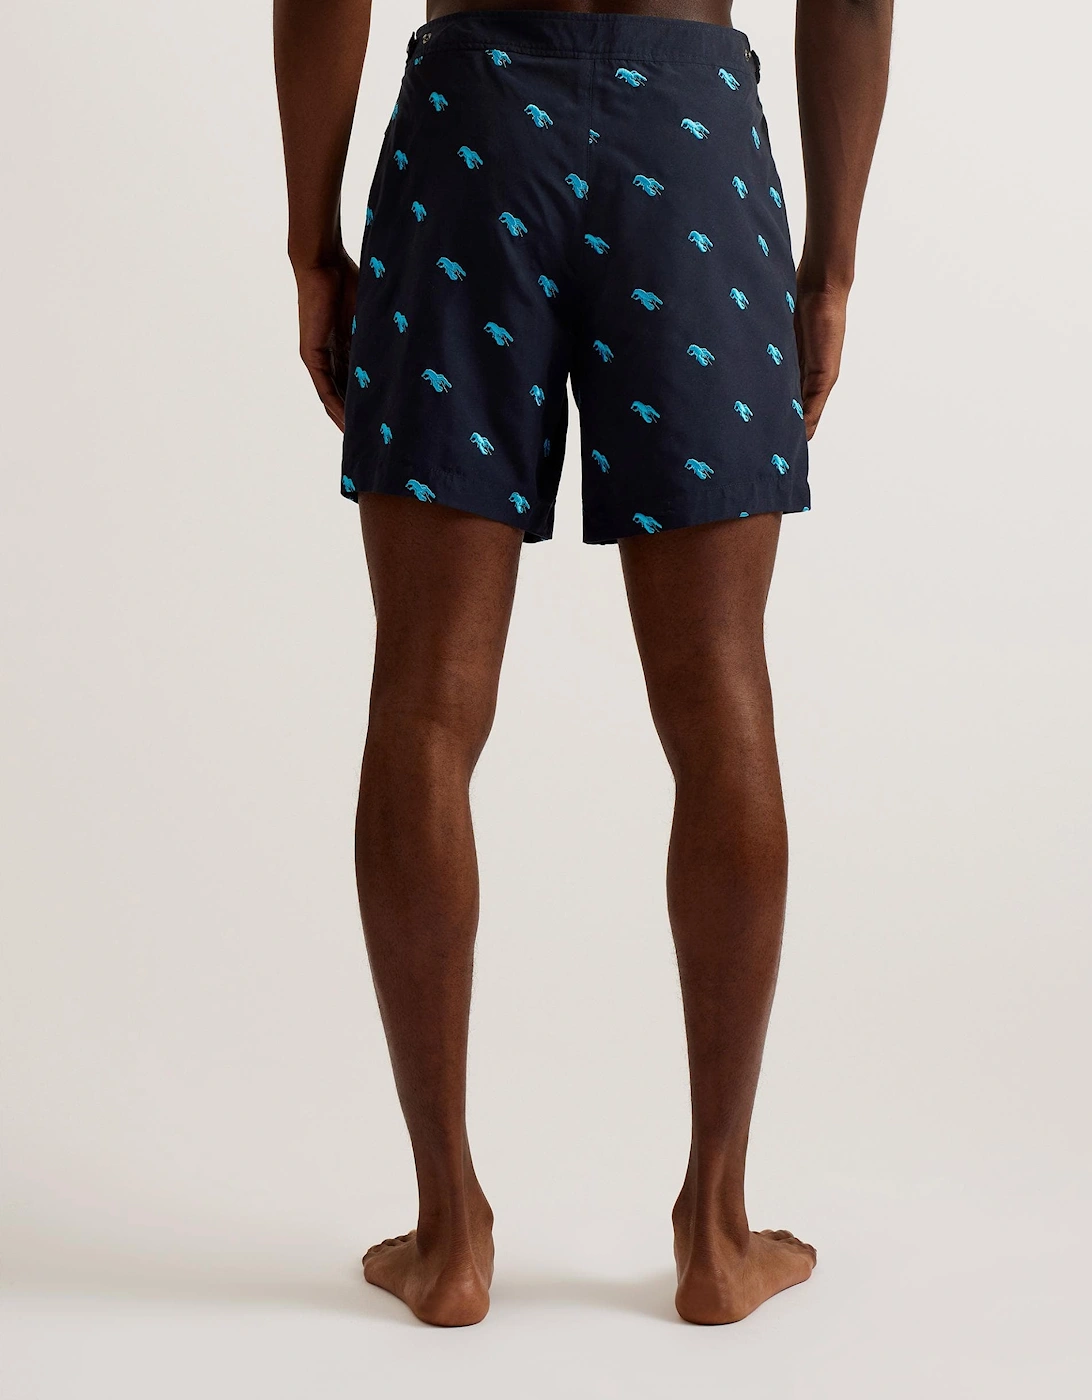 LOBTA Mens Embroidered Lobster Swim Shorts